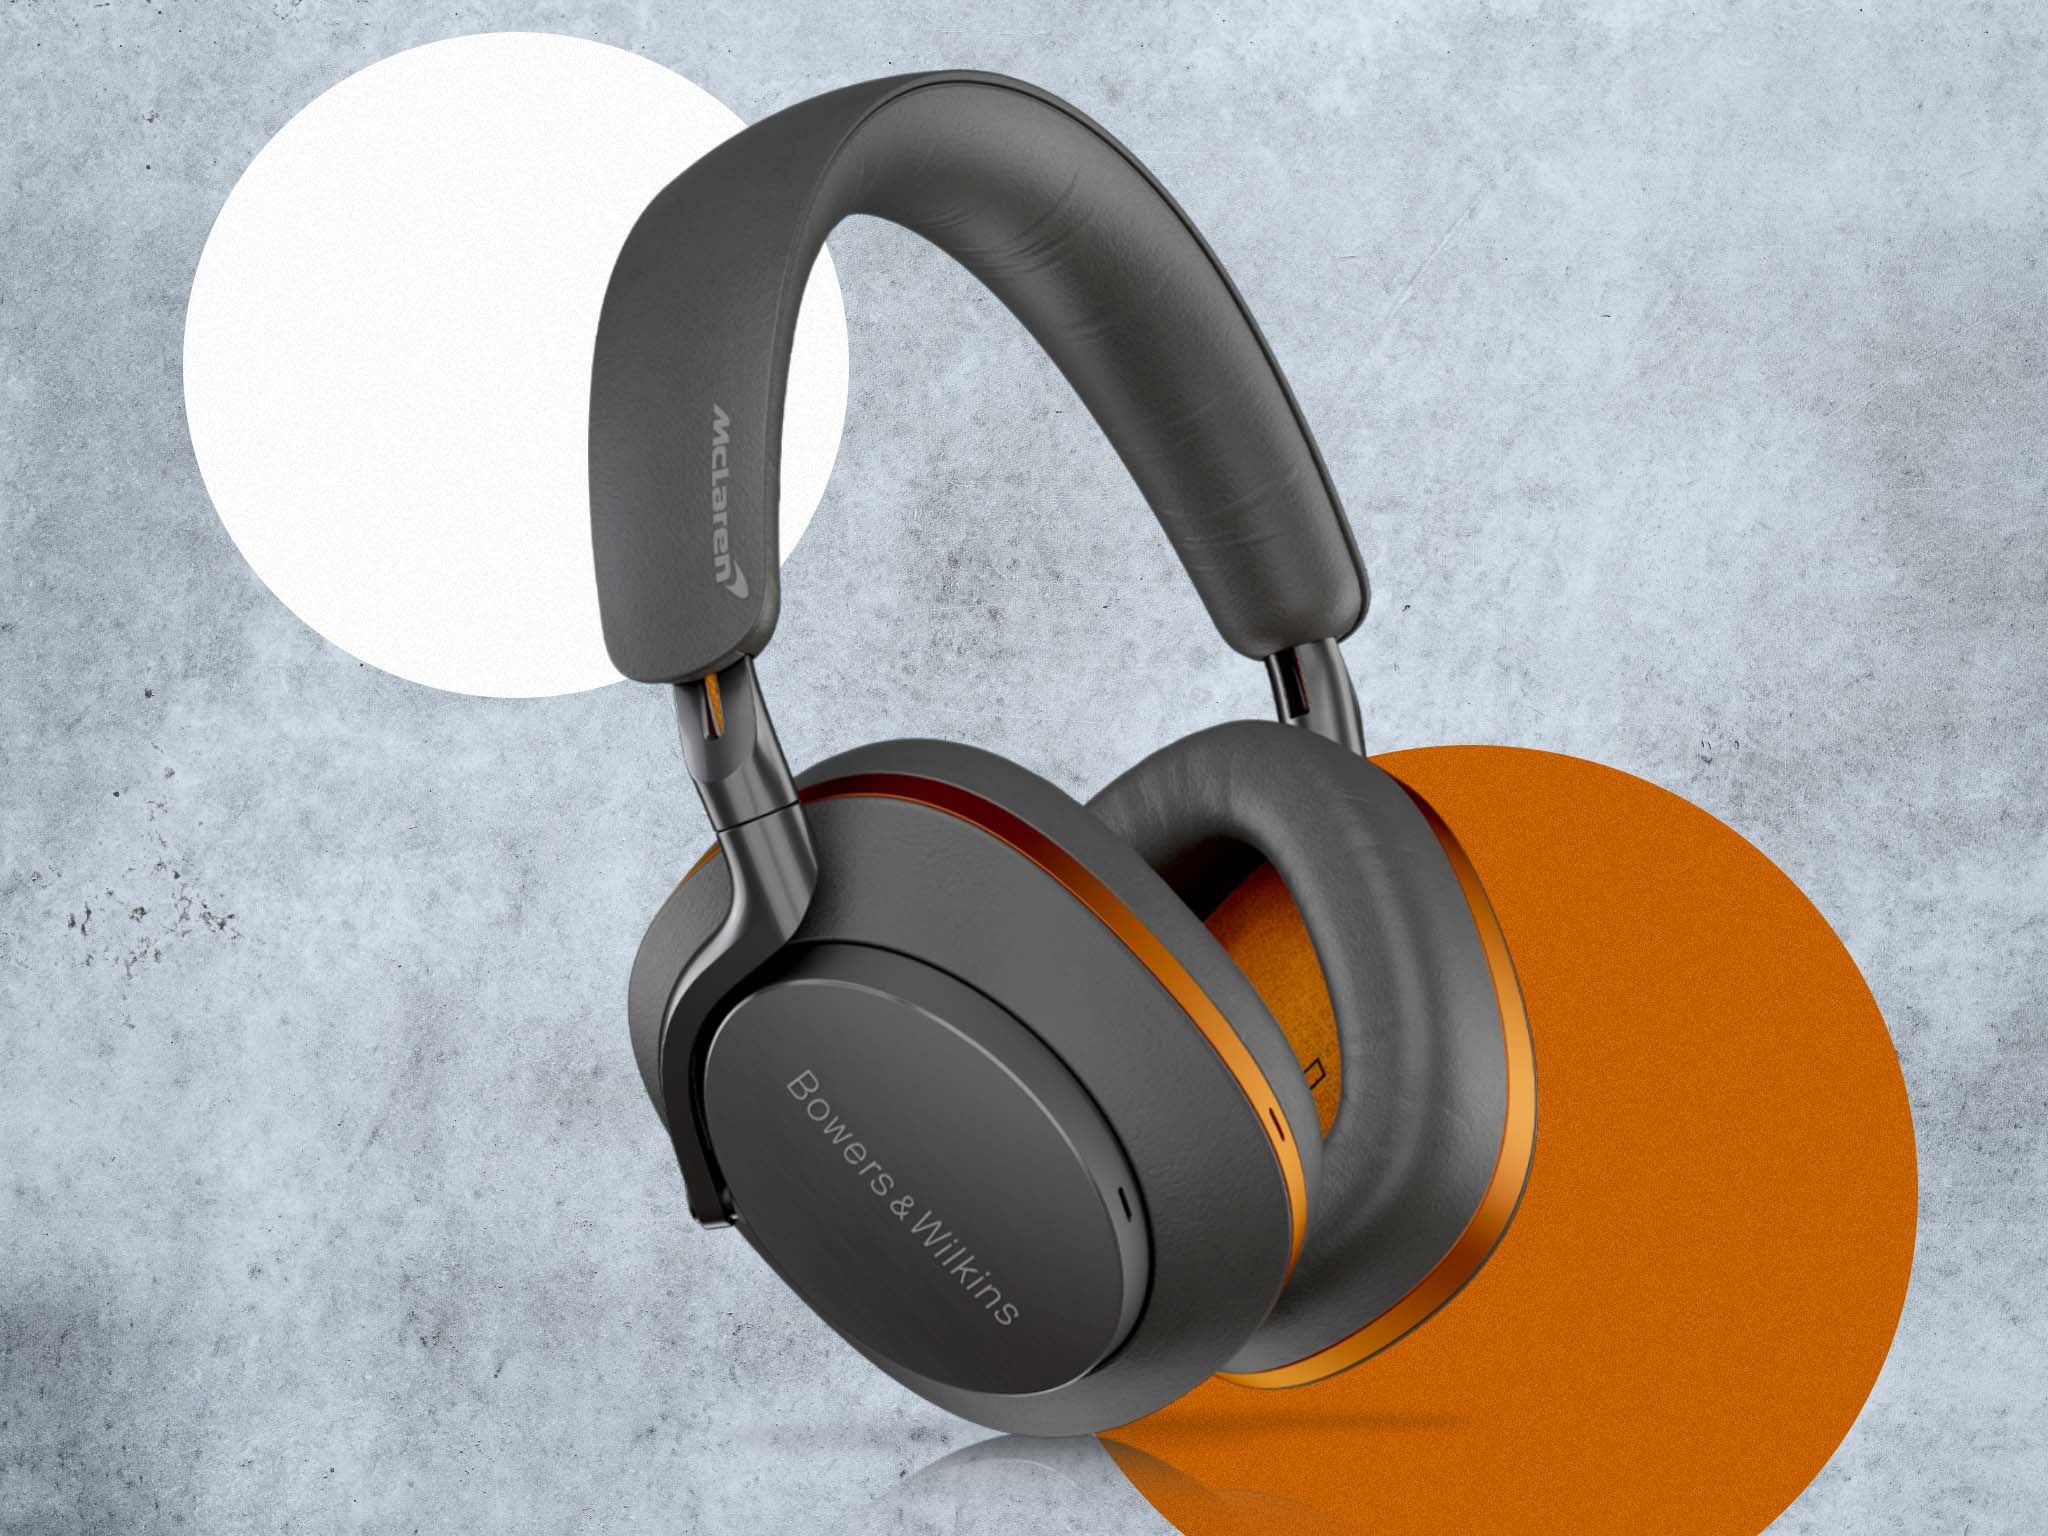 The headphones feature papaya-orange detailing